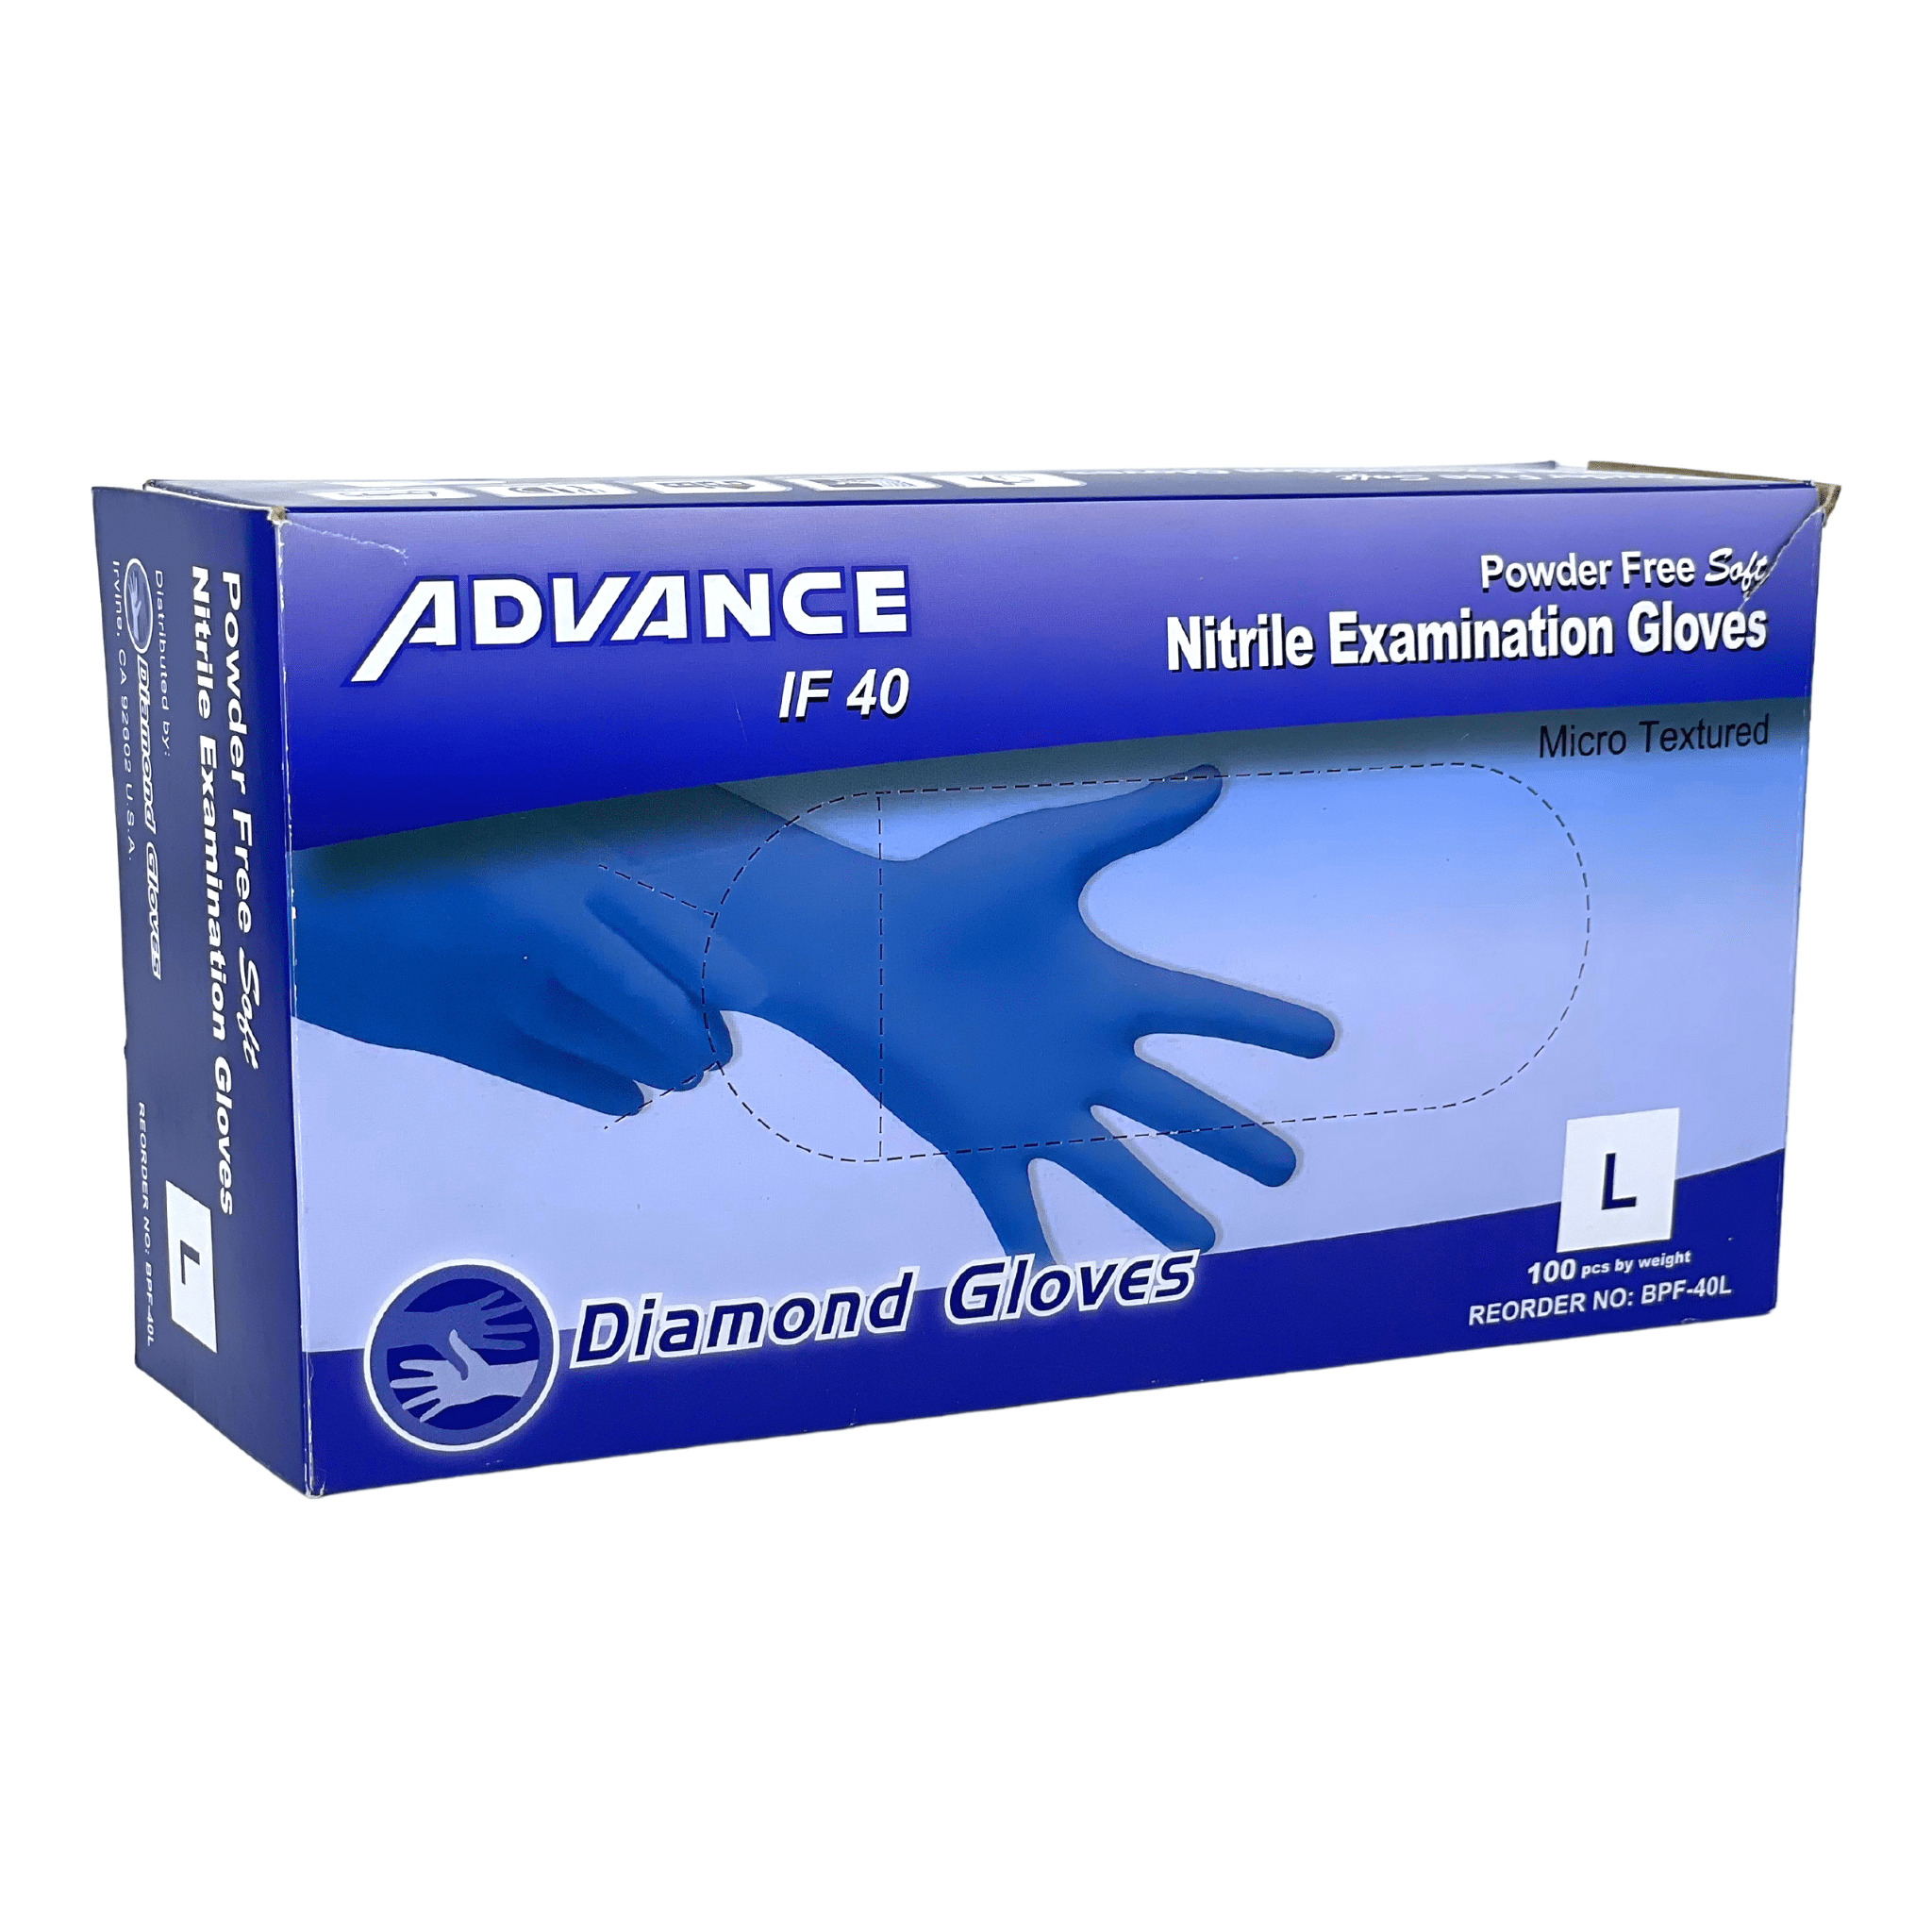 Guantes de nitrilo 4 mil desechables sin talco 100 guantes por caja – Lobo  Products, Inc.